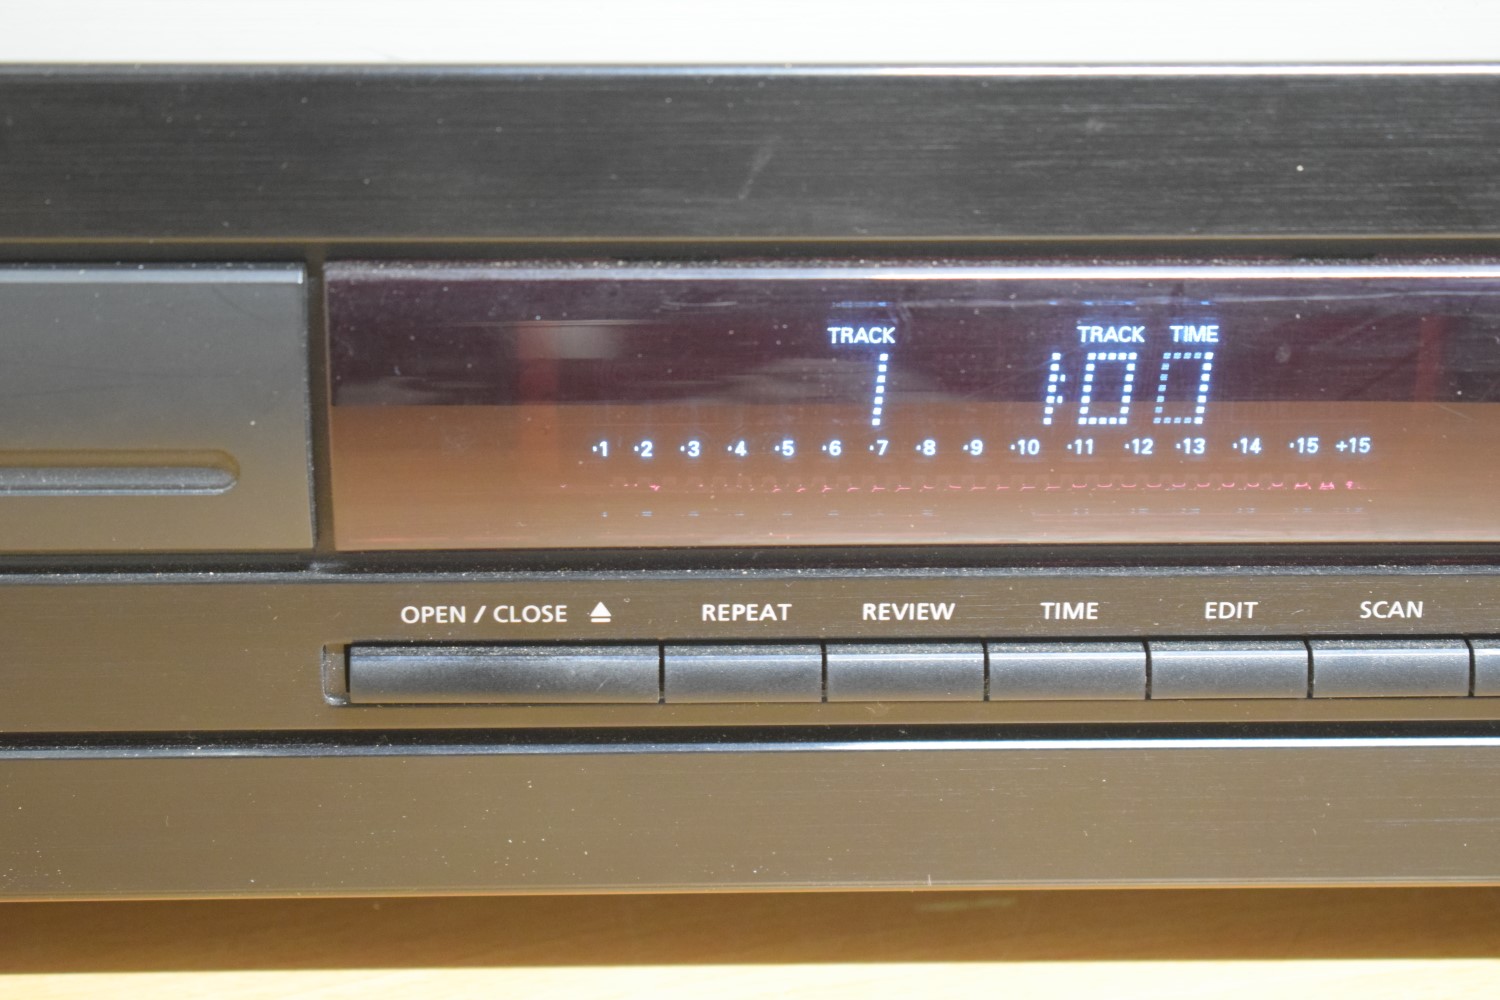 Philips CD730 CD-Player